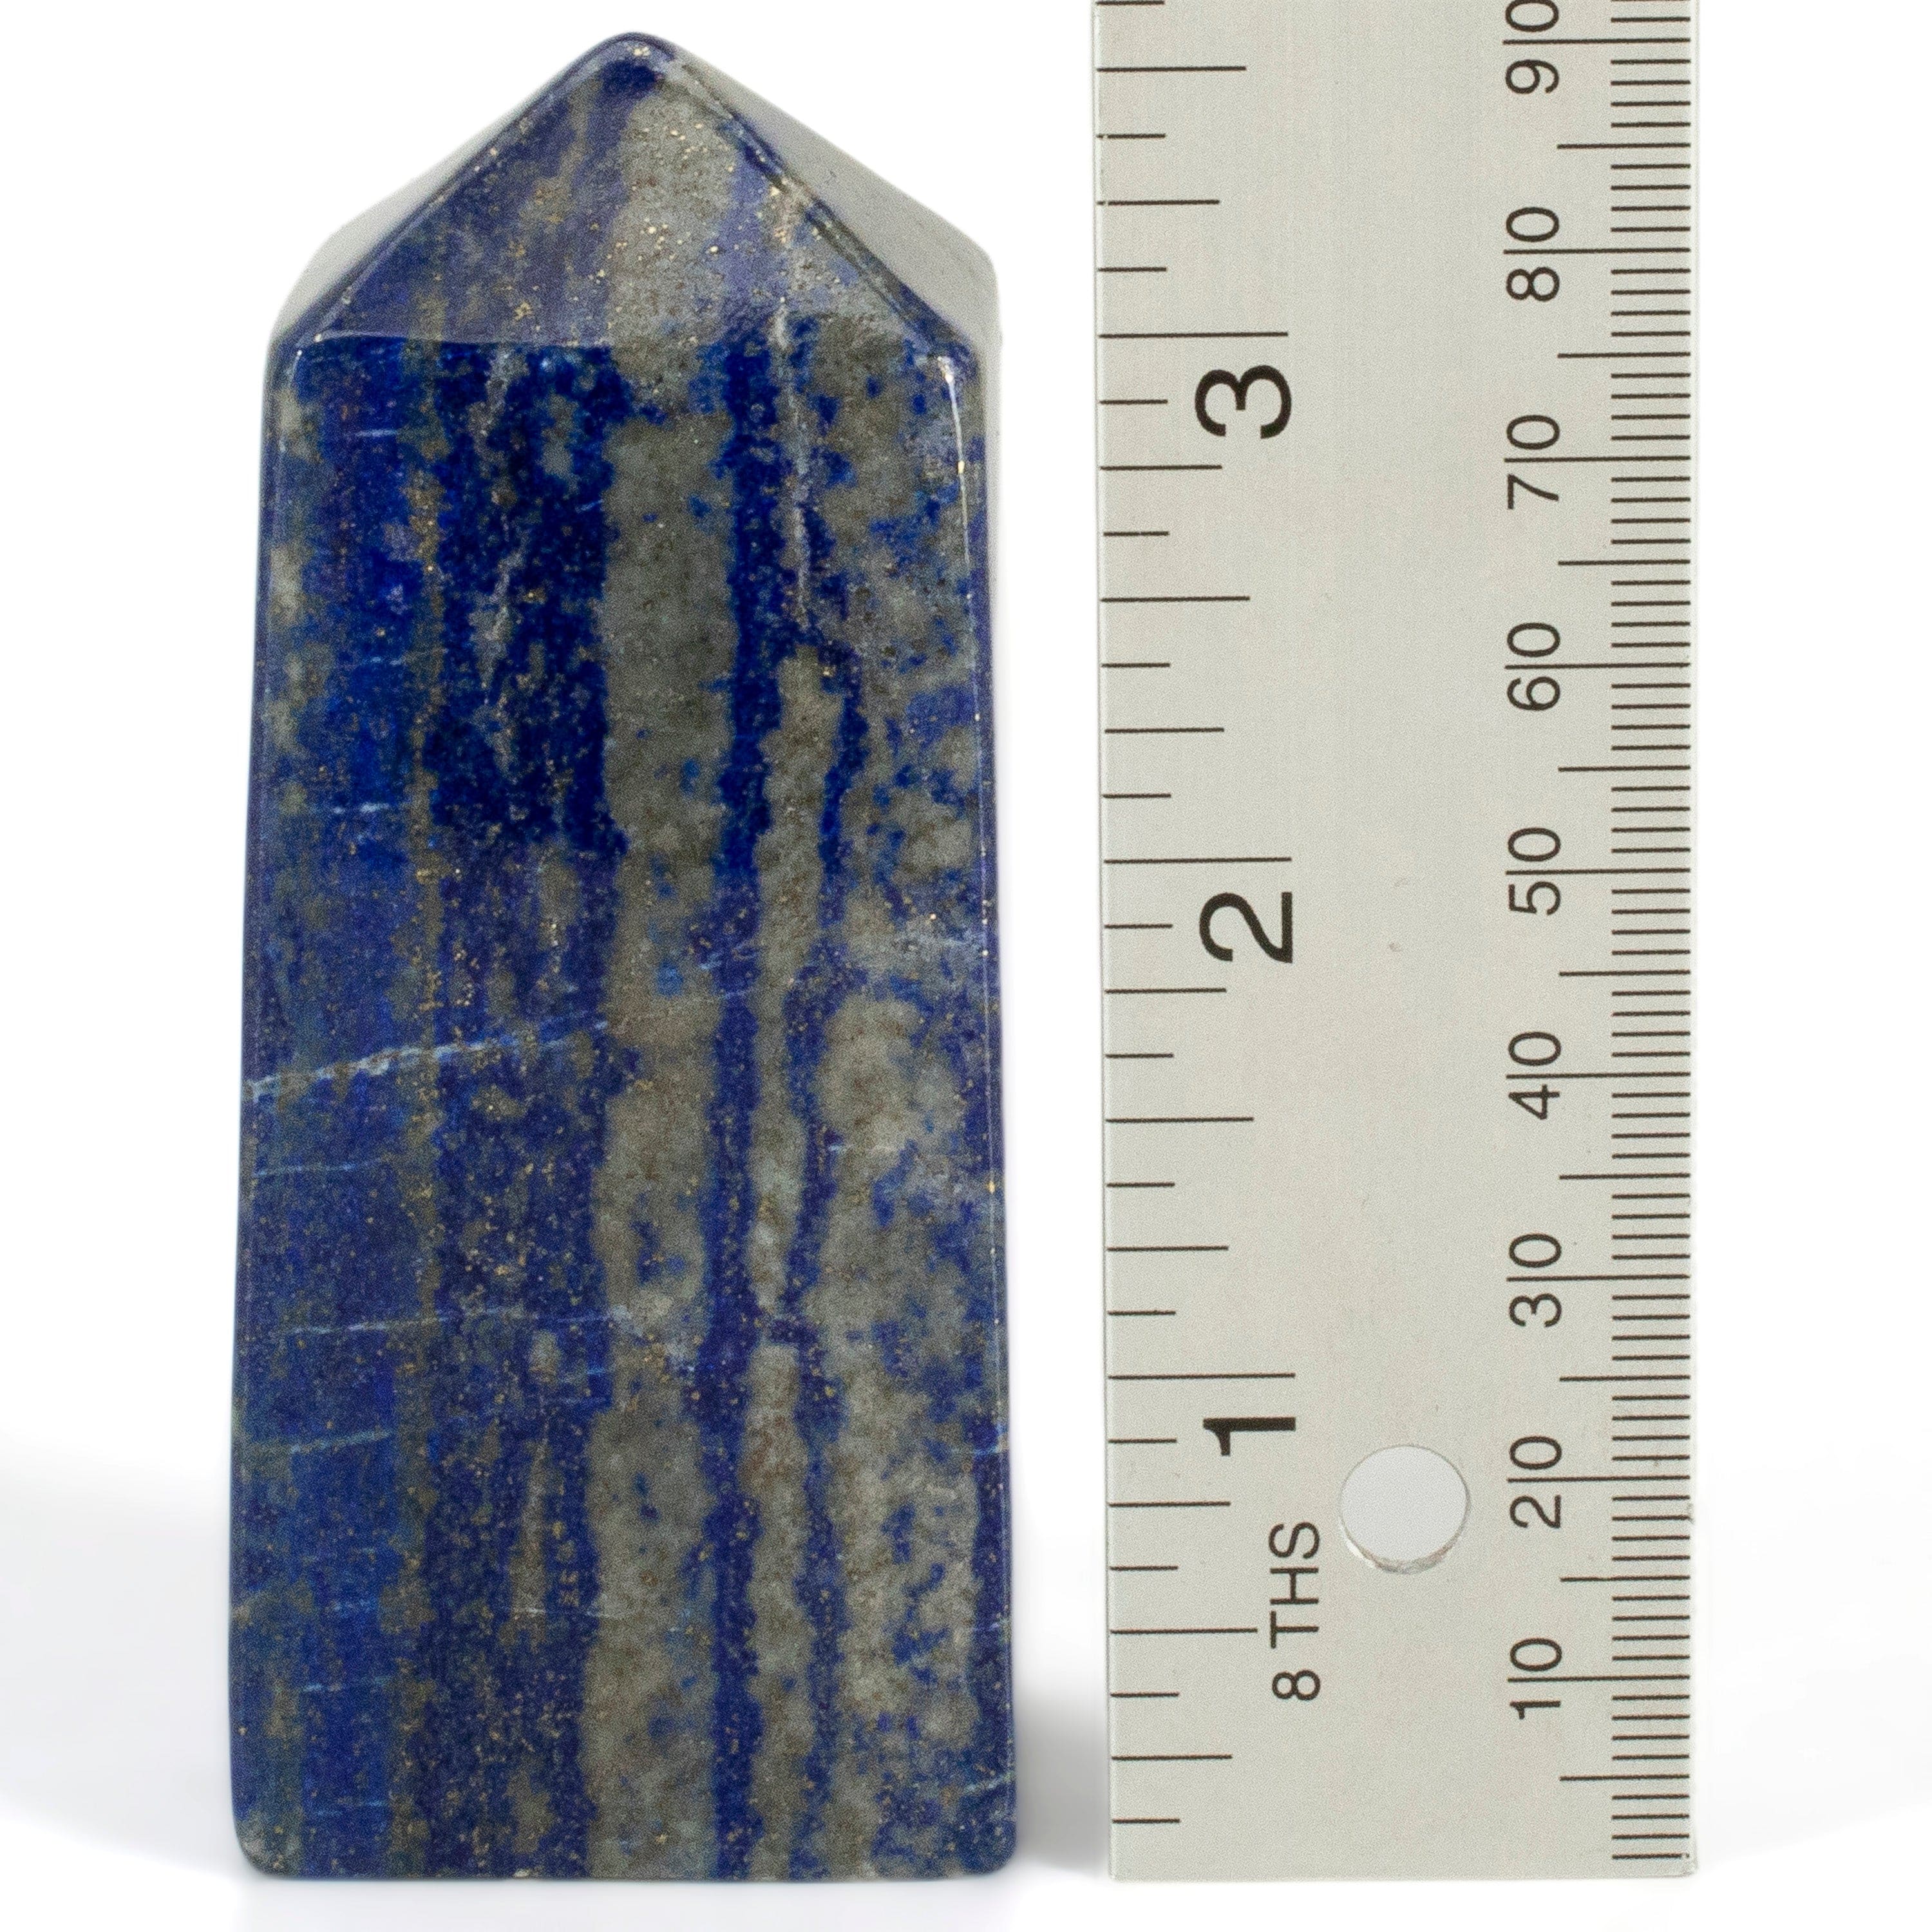 Kalifano Lapis Lapis Lazuli Polished Obelisk from Afghanistan - 3.5" / 291 grams LPOB600.002